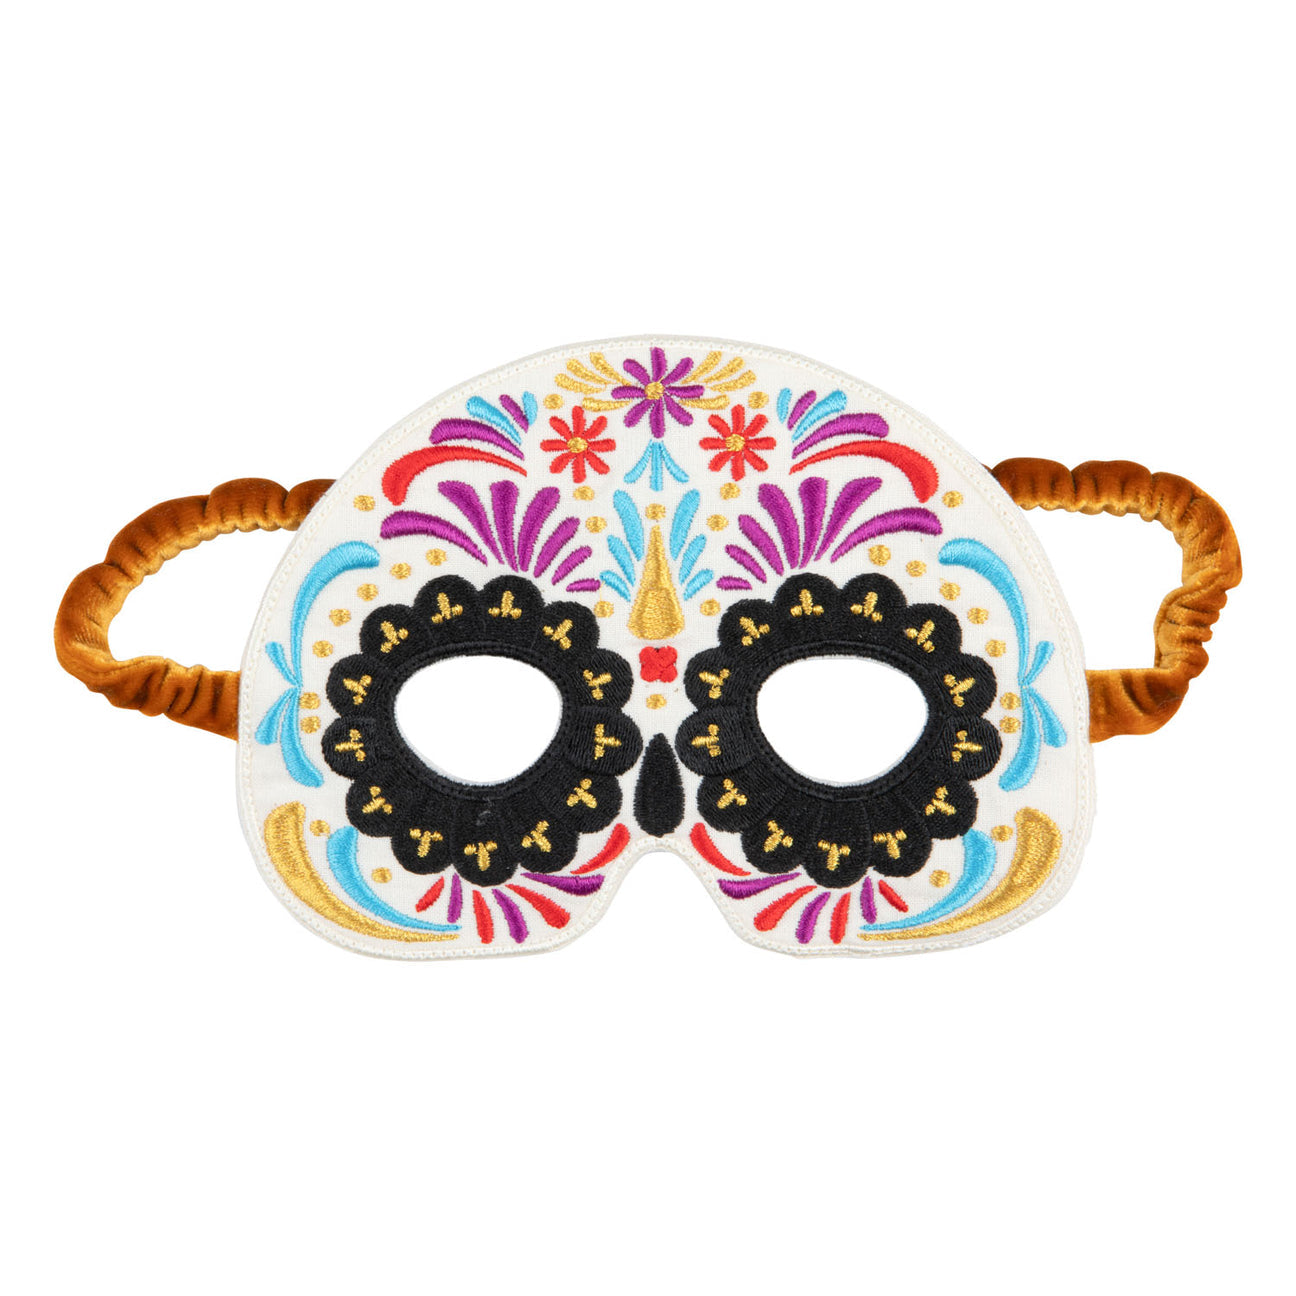 Skull mask "Colorful Halloween"